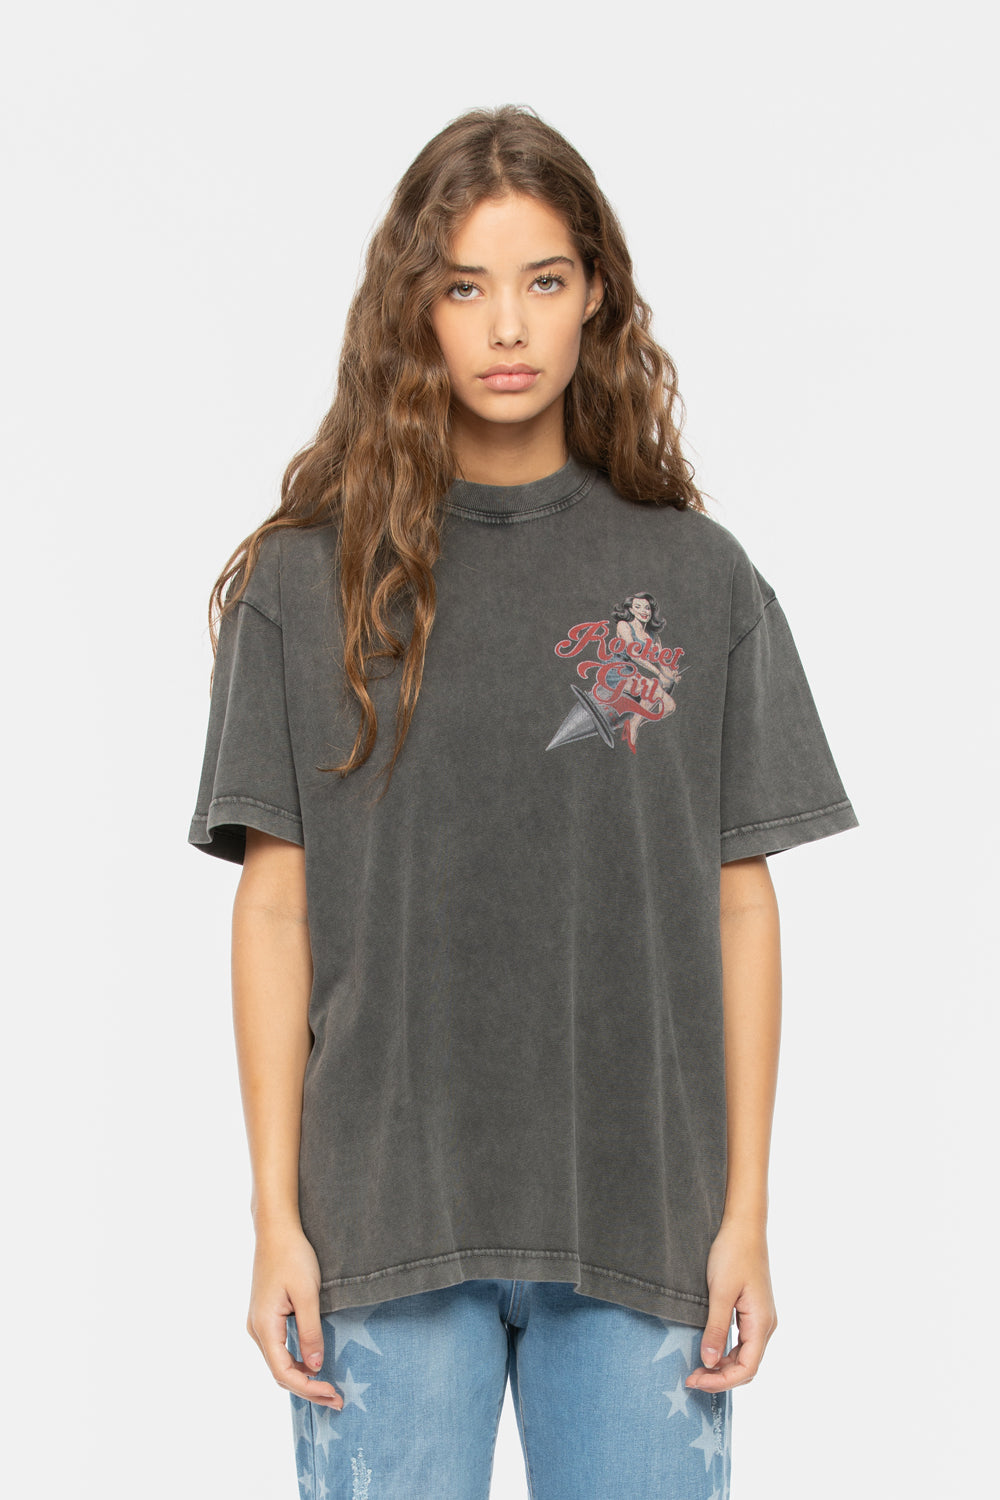 Rocket Girl T-Shirt Grey